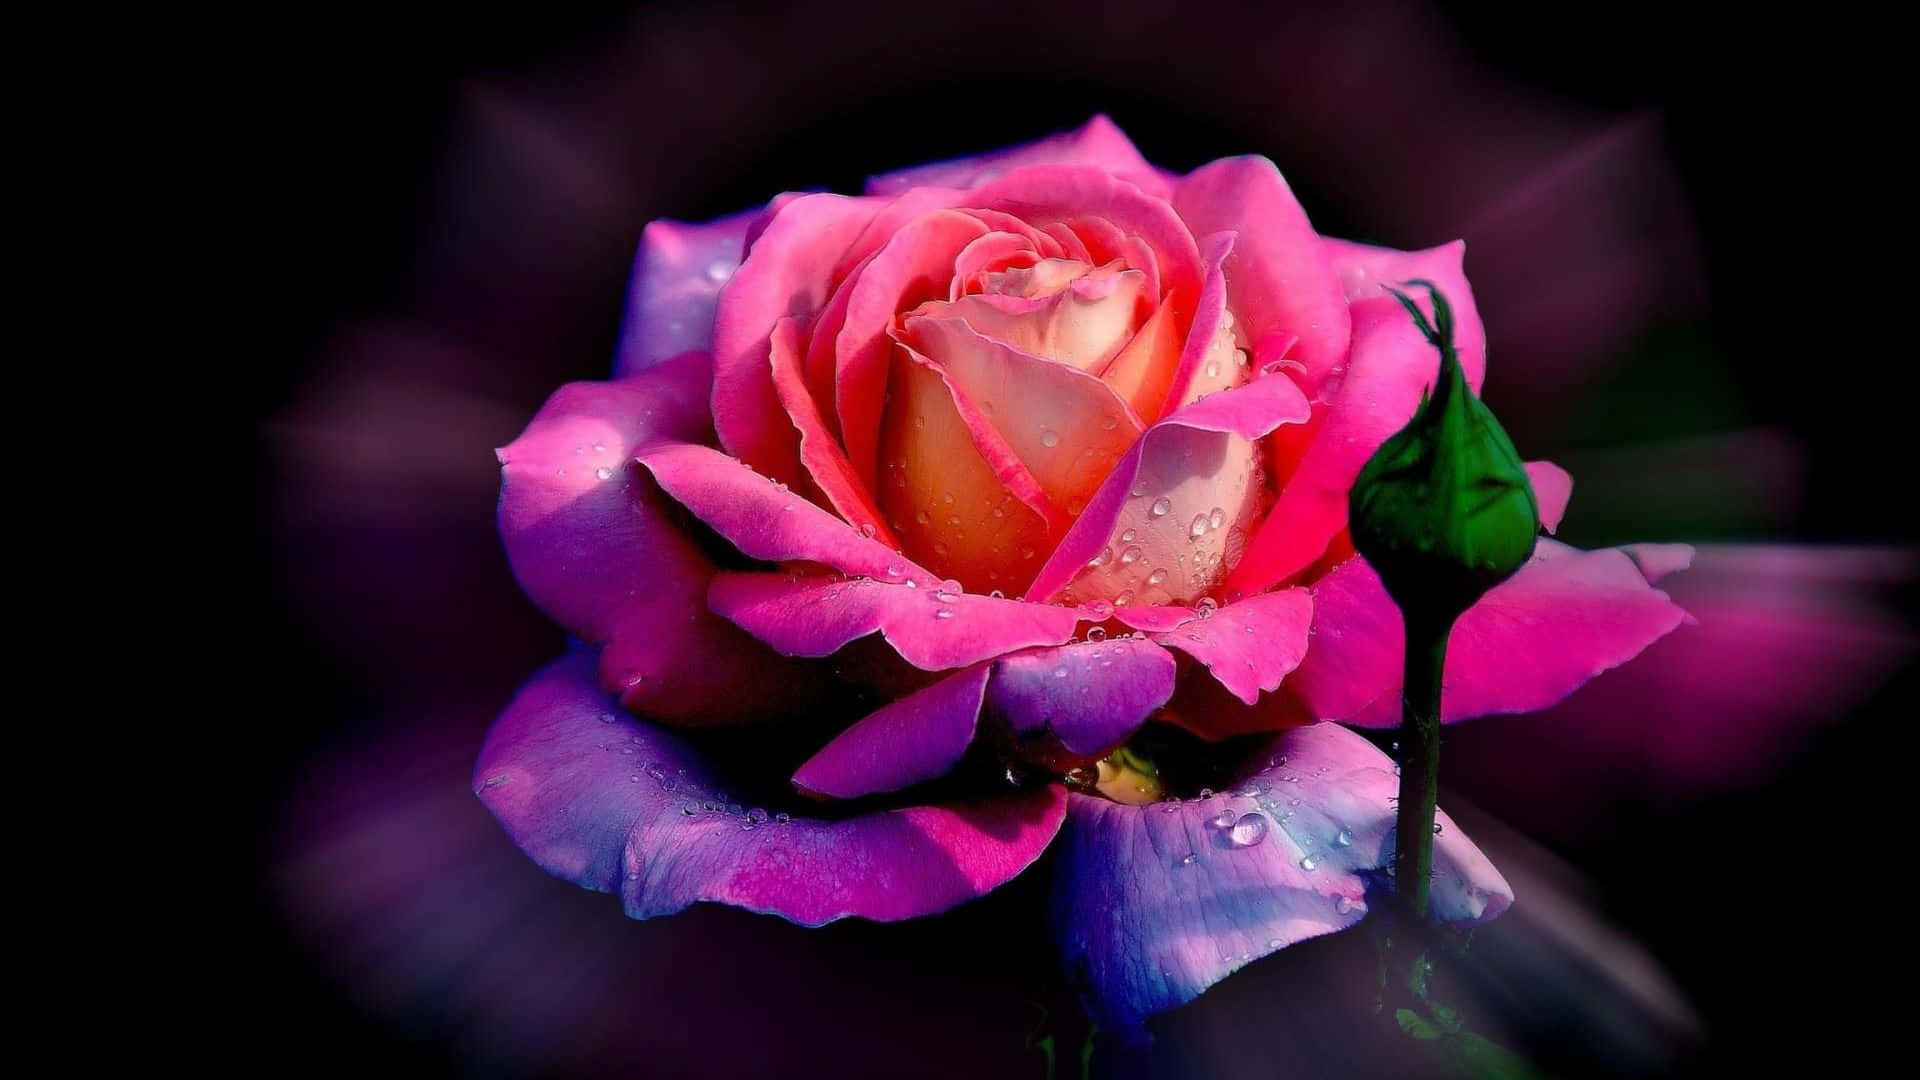 Beautiful Roses Bud Dew Drops Digital Art Picture